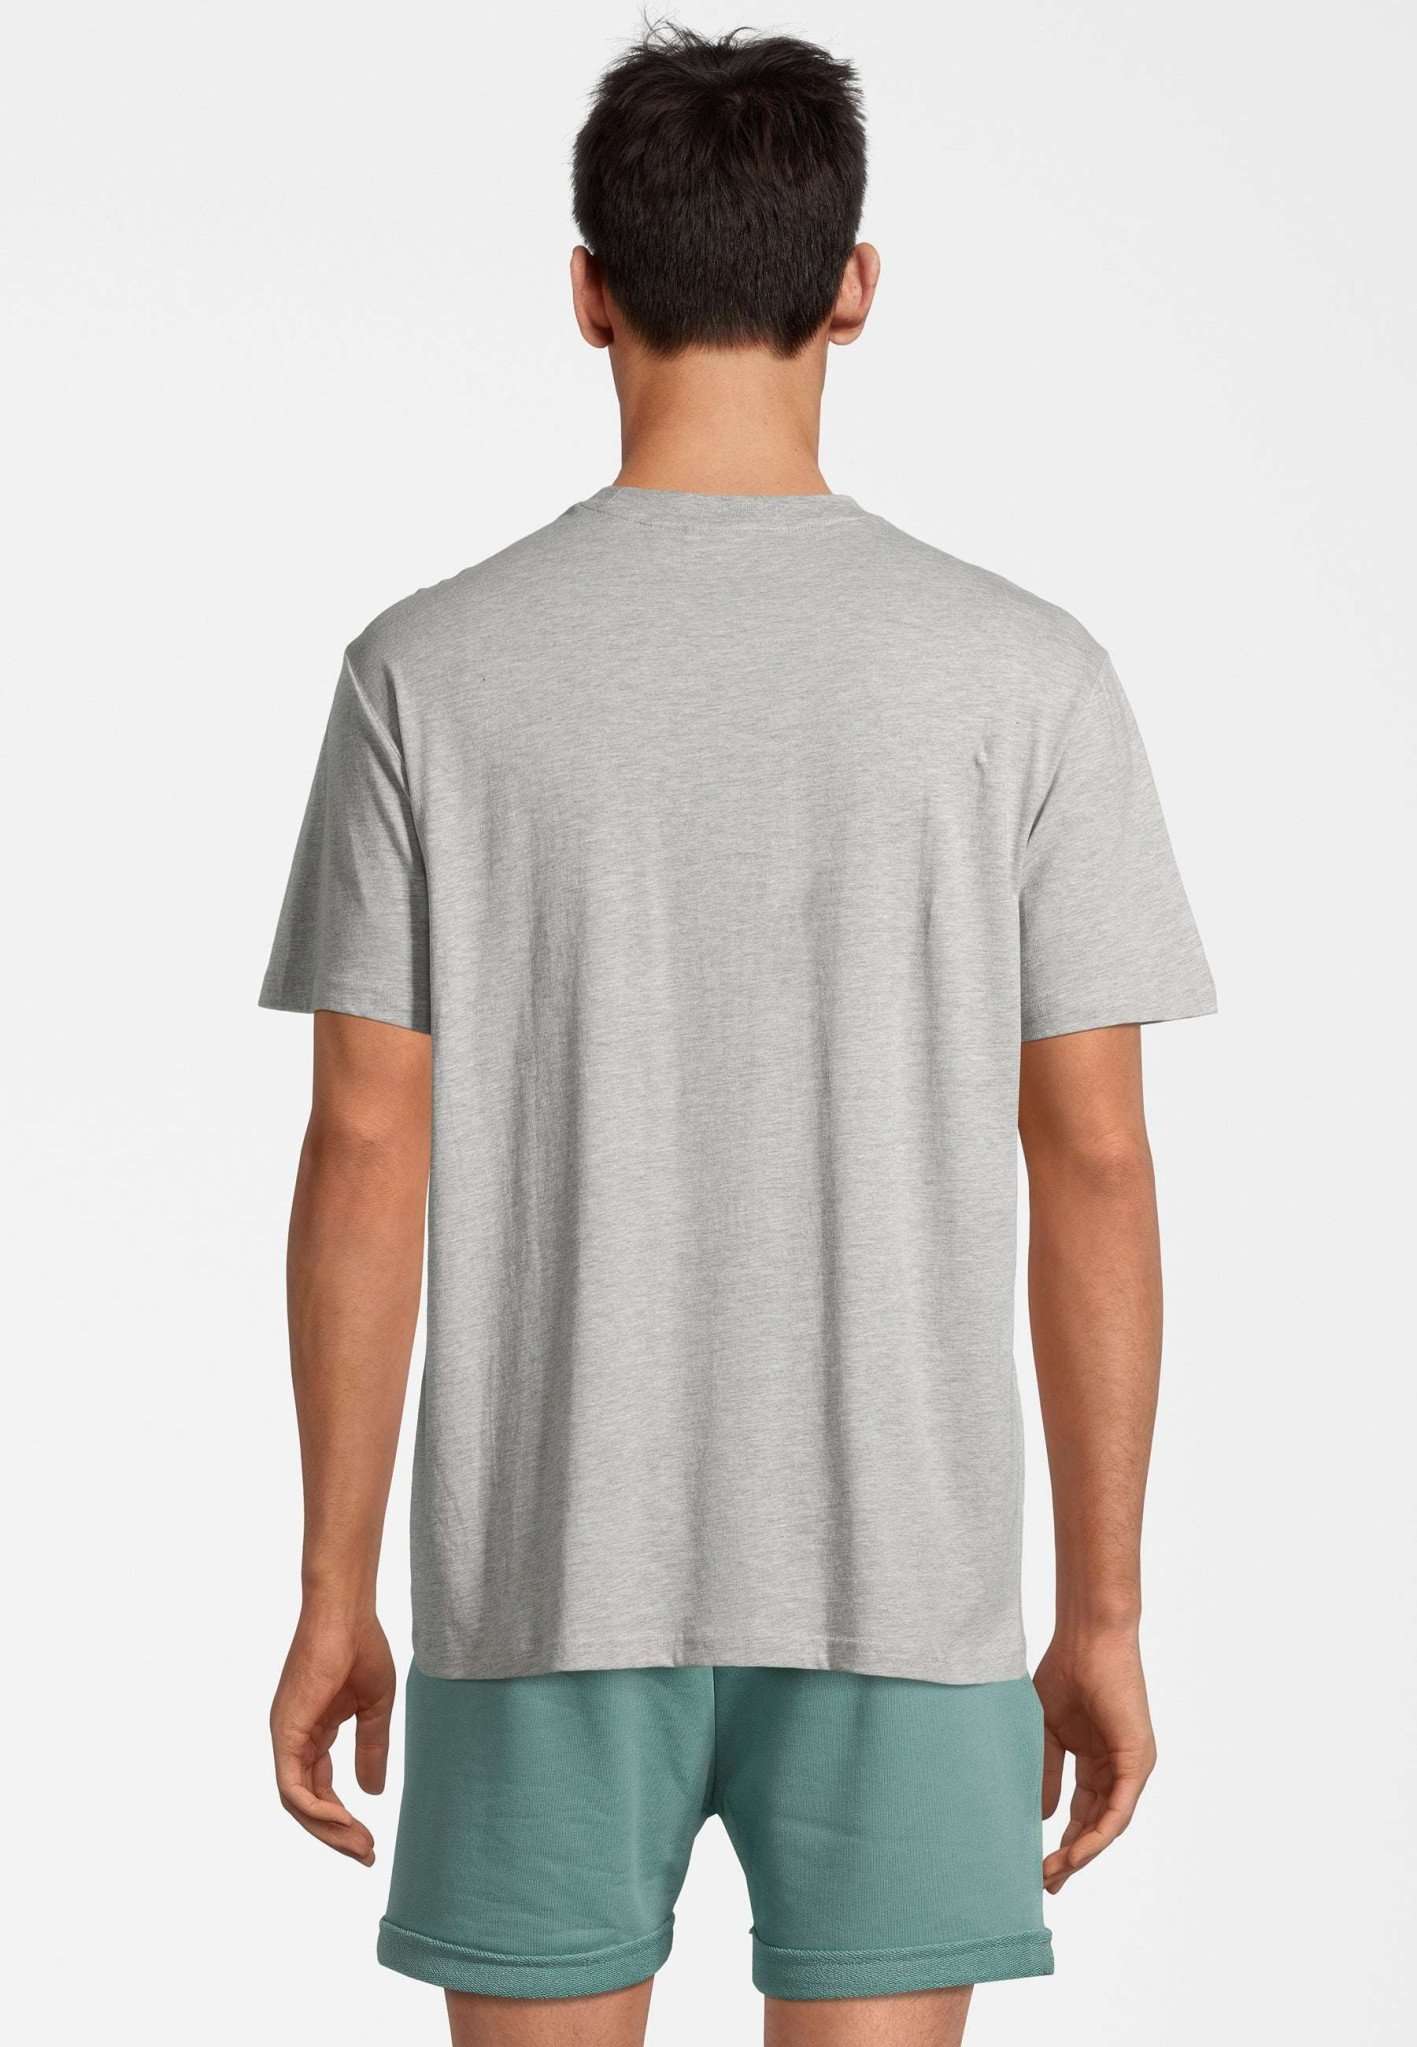 Berloz Tee in Light Grey Melange T-Shirts Fila   